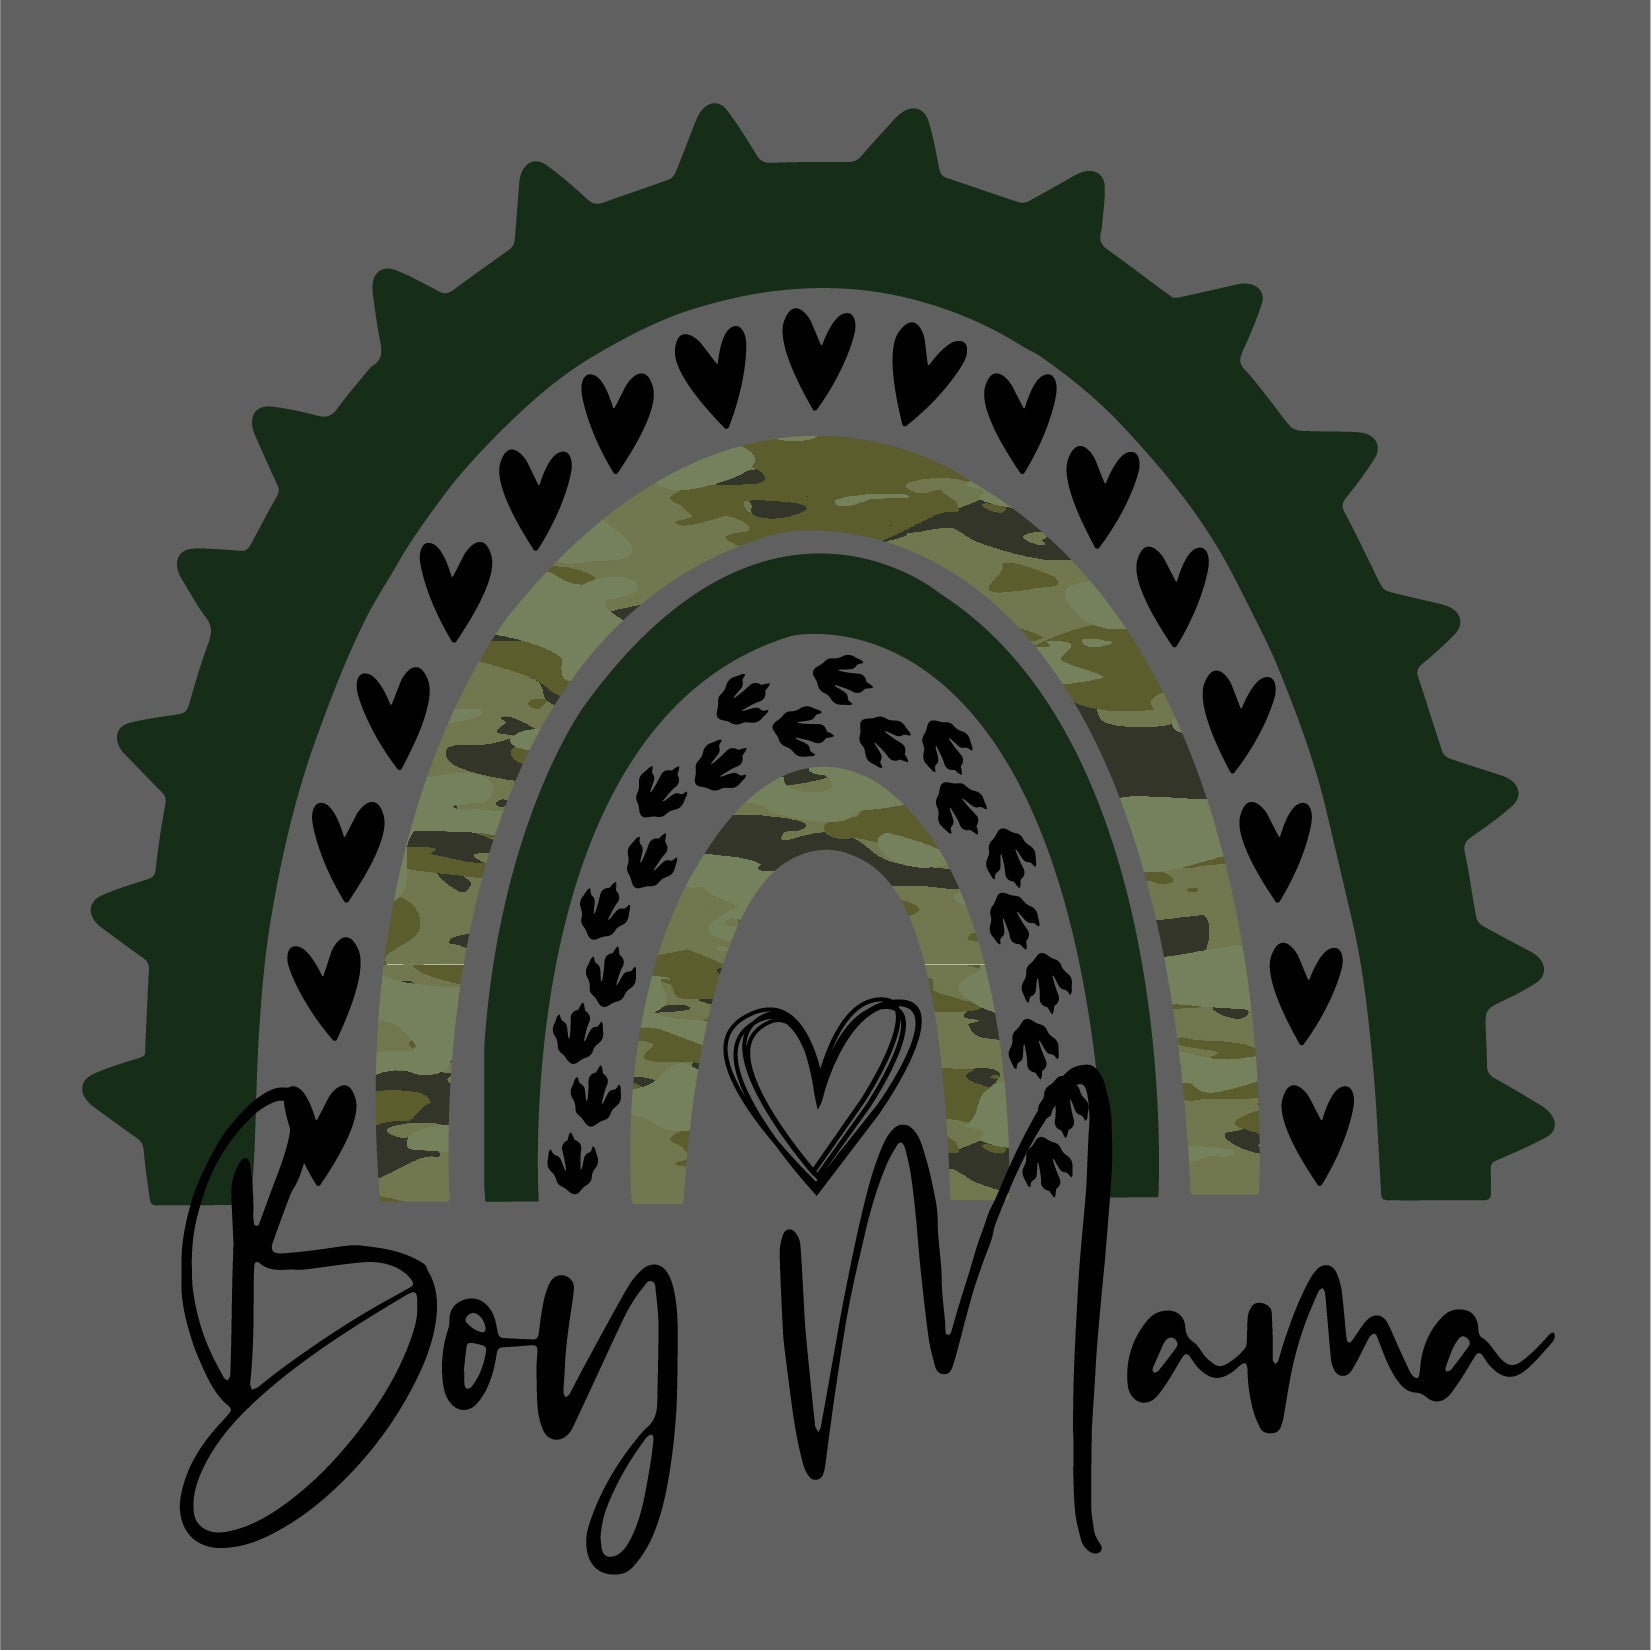 Digital Download - Boy Mama PNG